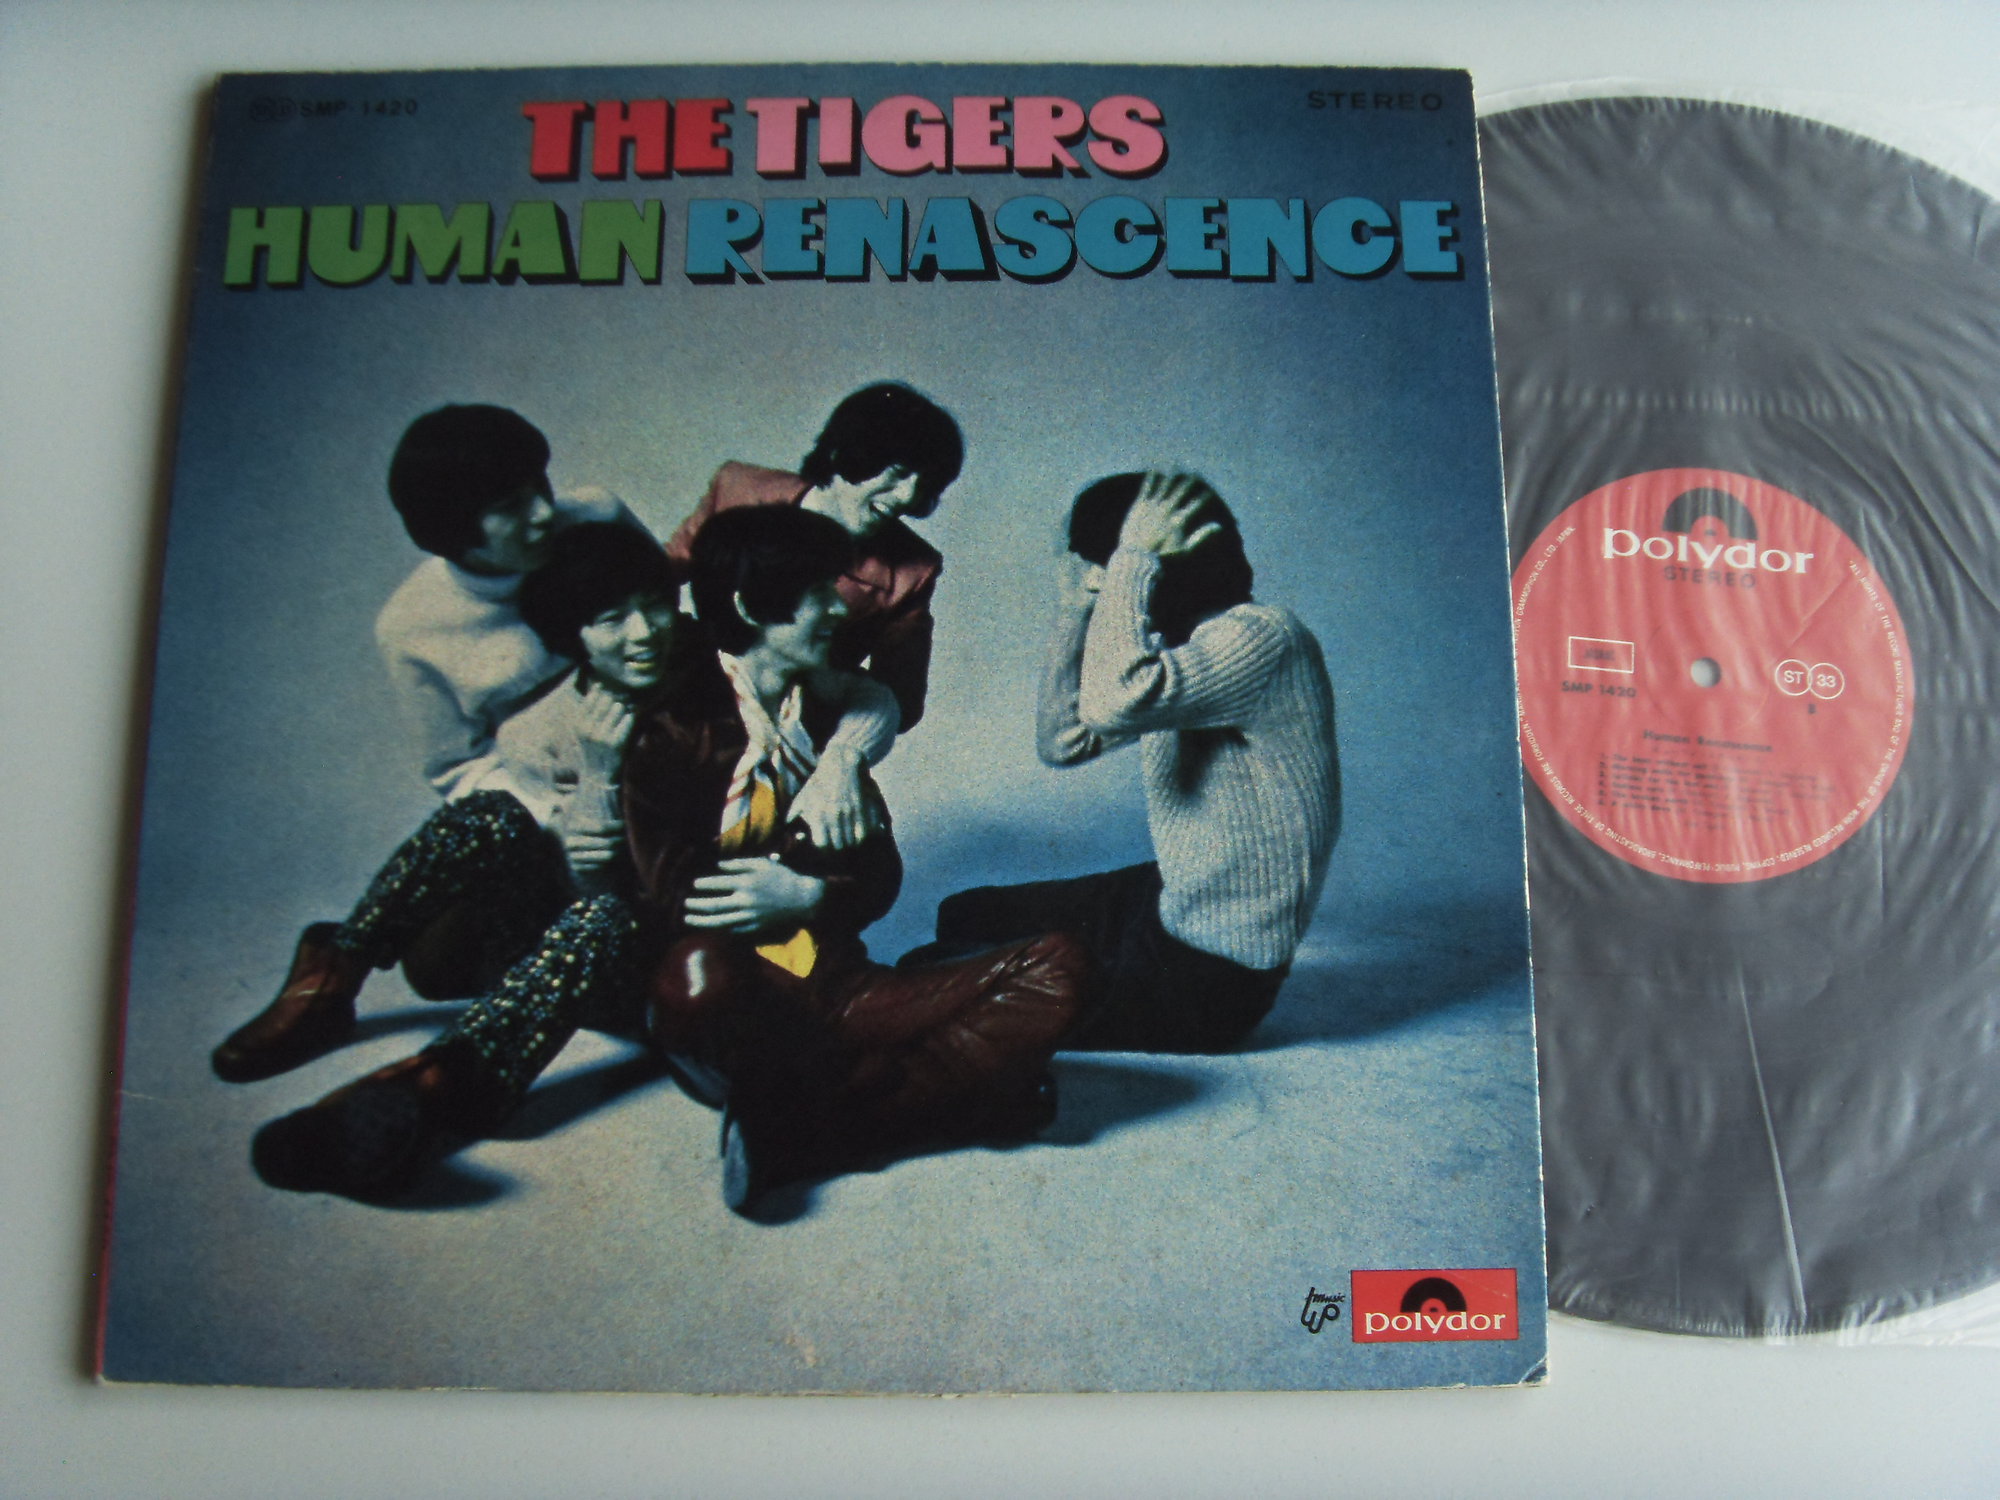 THE TIGERS Human renascence